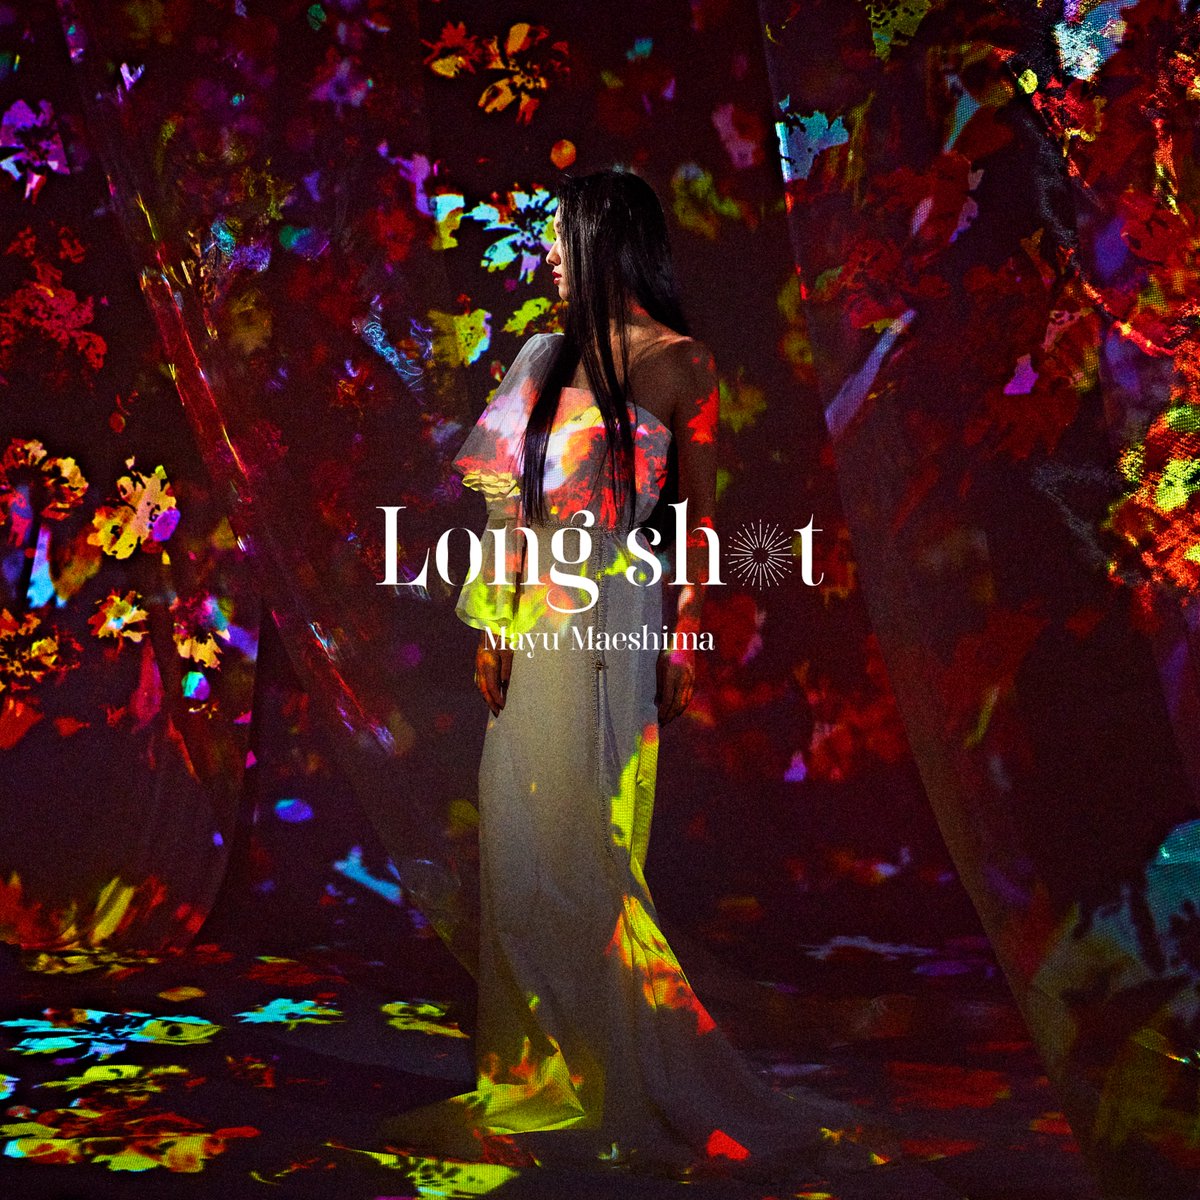 Cover art for『Mayu Maeshima - Long shot』from the release『Long shot』